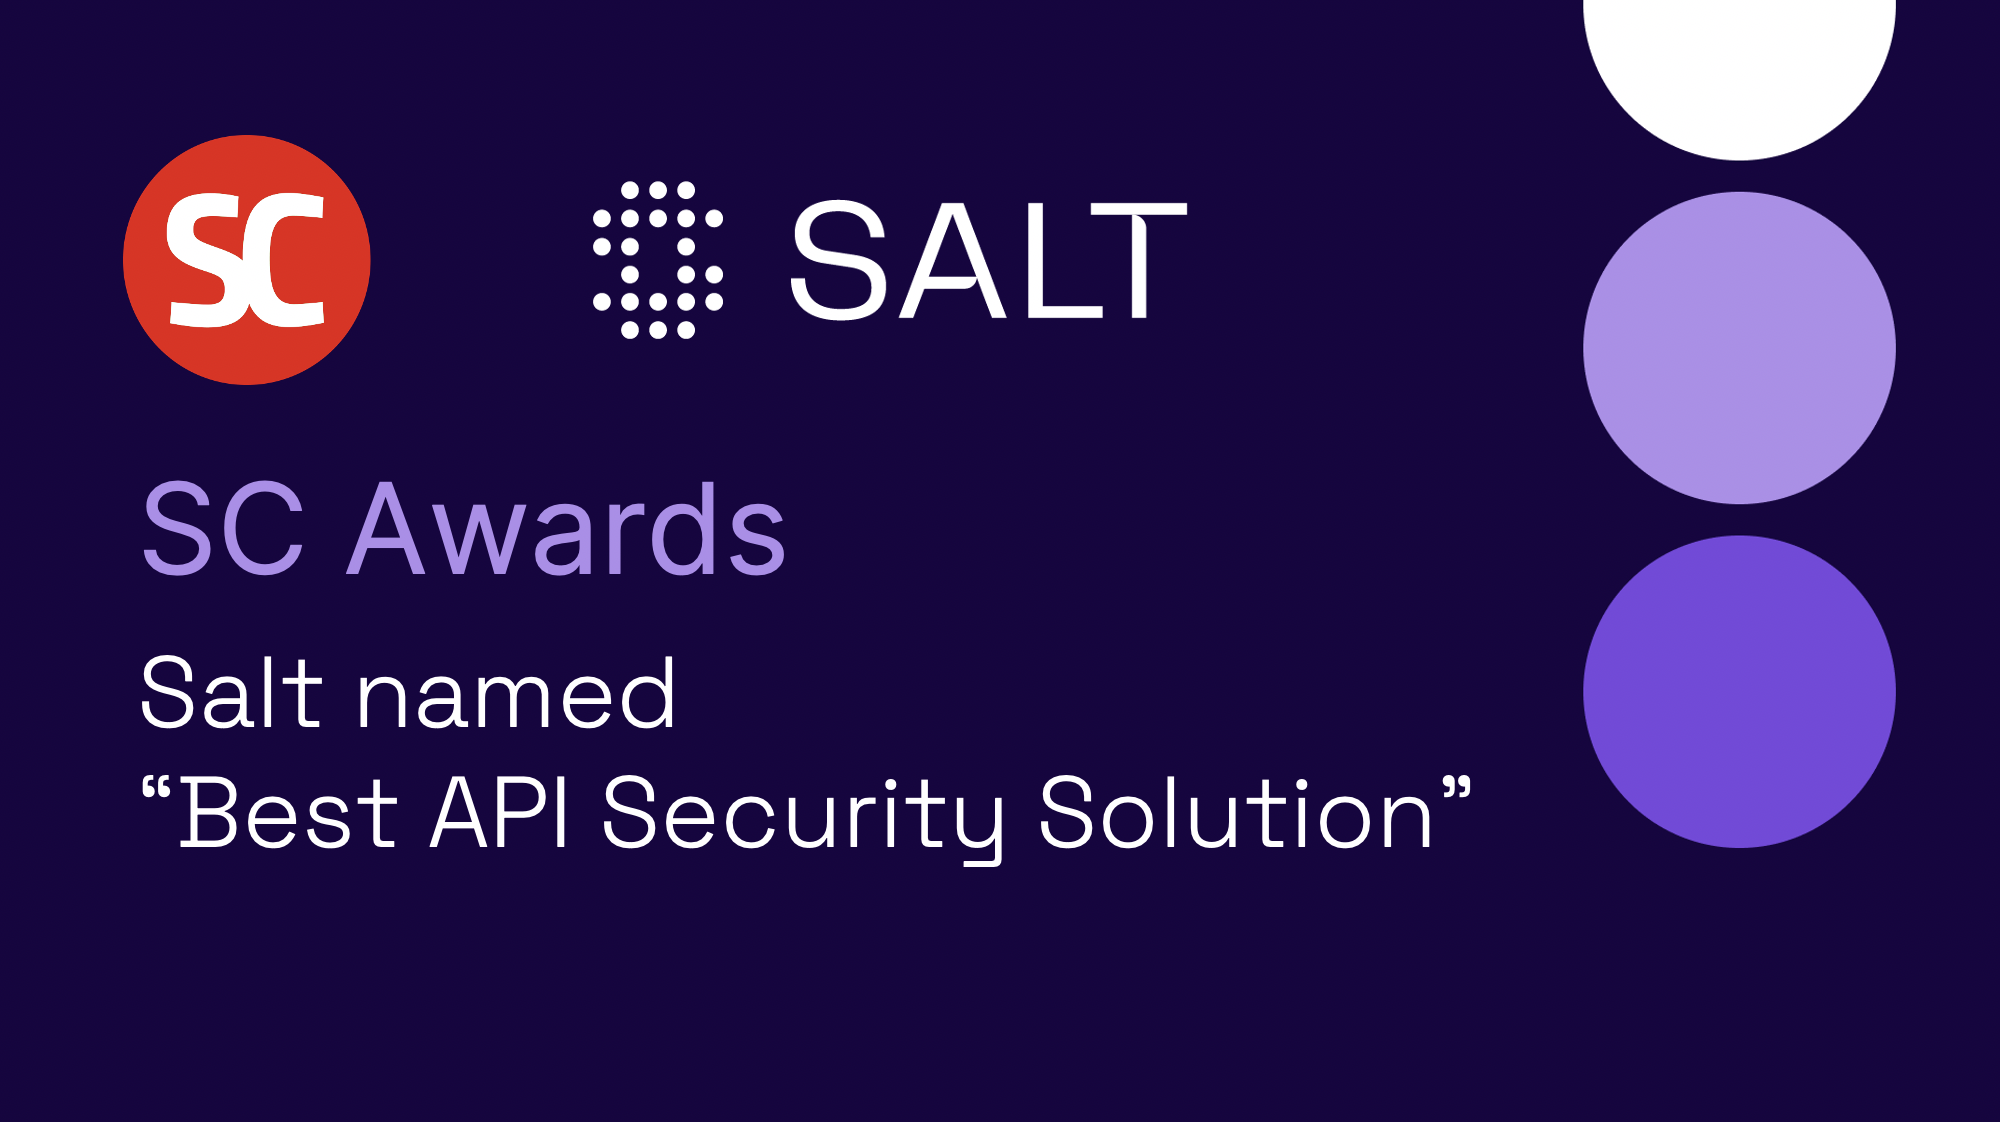 Salt Wins Prestigious SC Magazine Award – “Best API Security Solution” – Source: securityboulevard.com